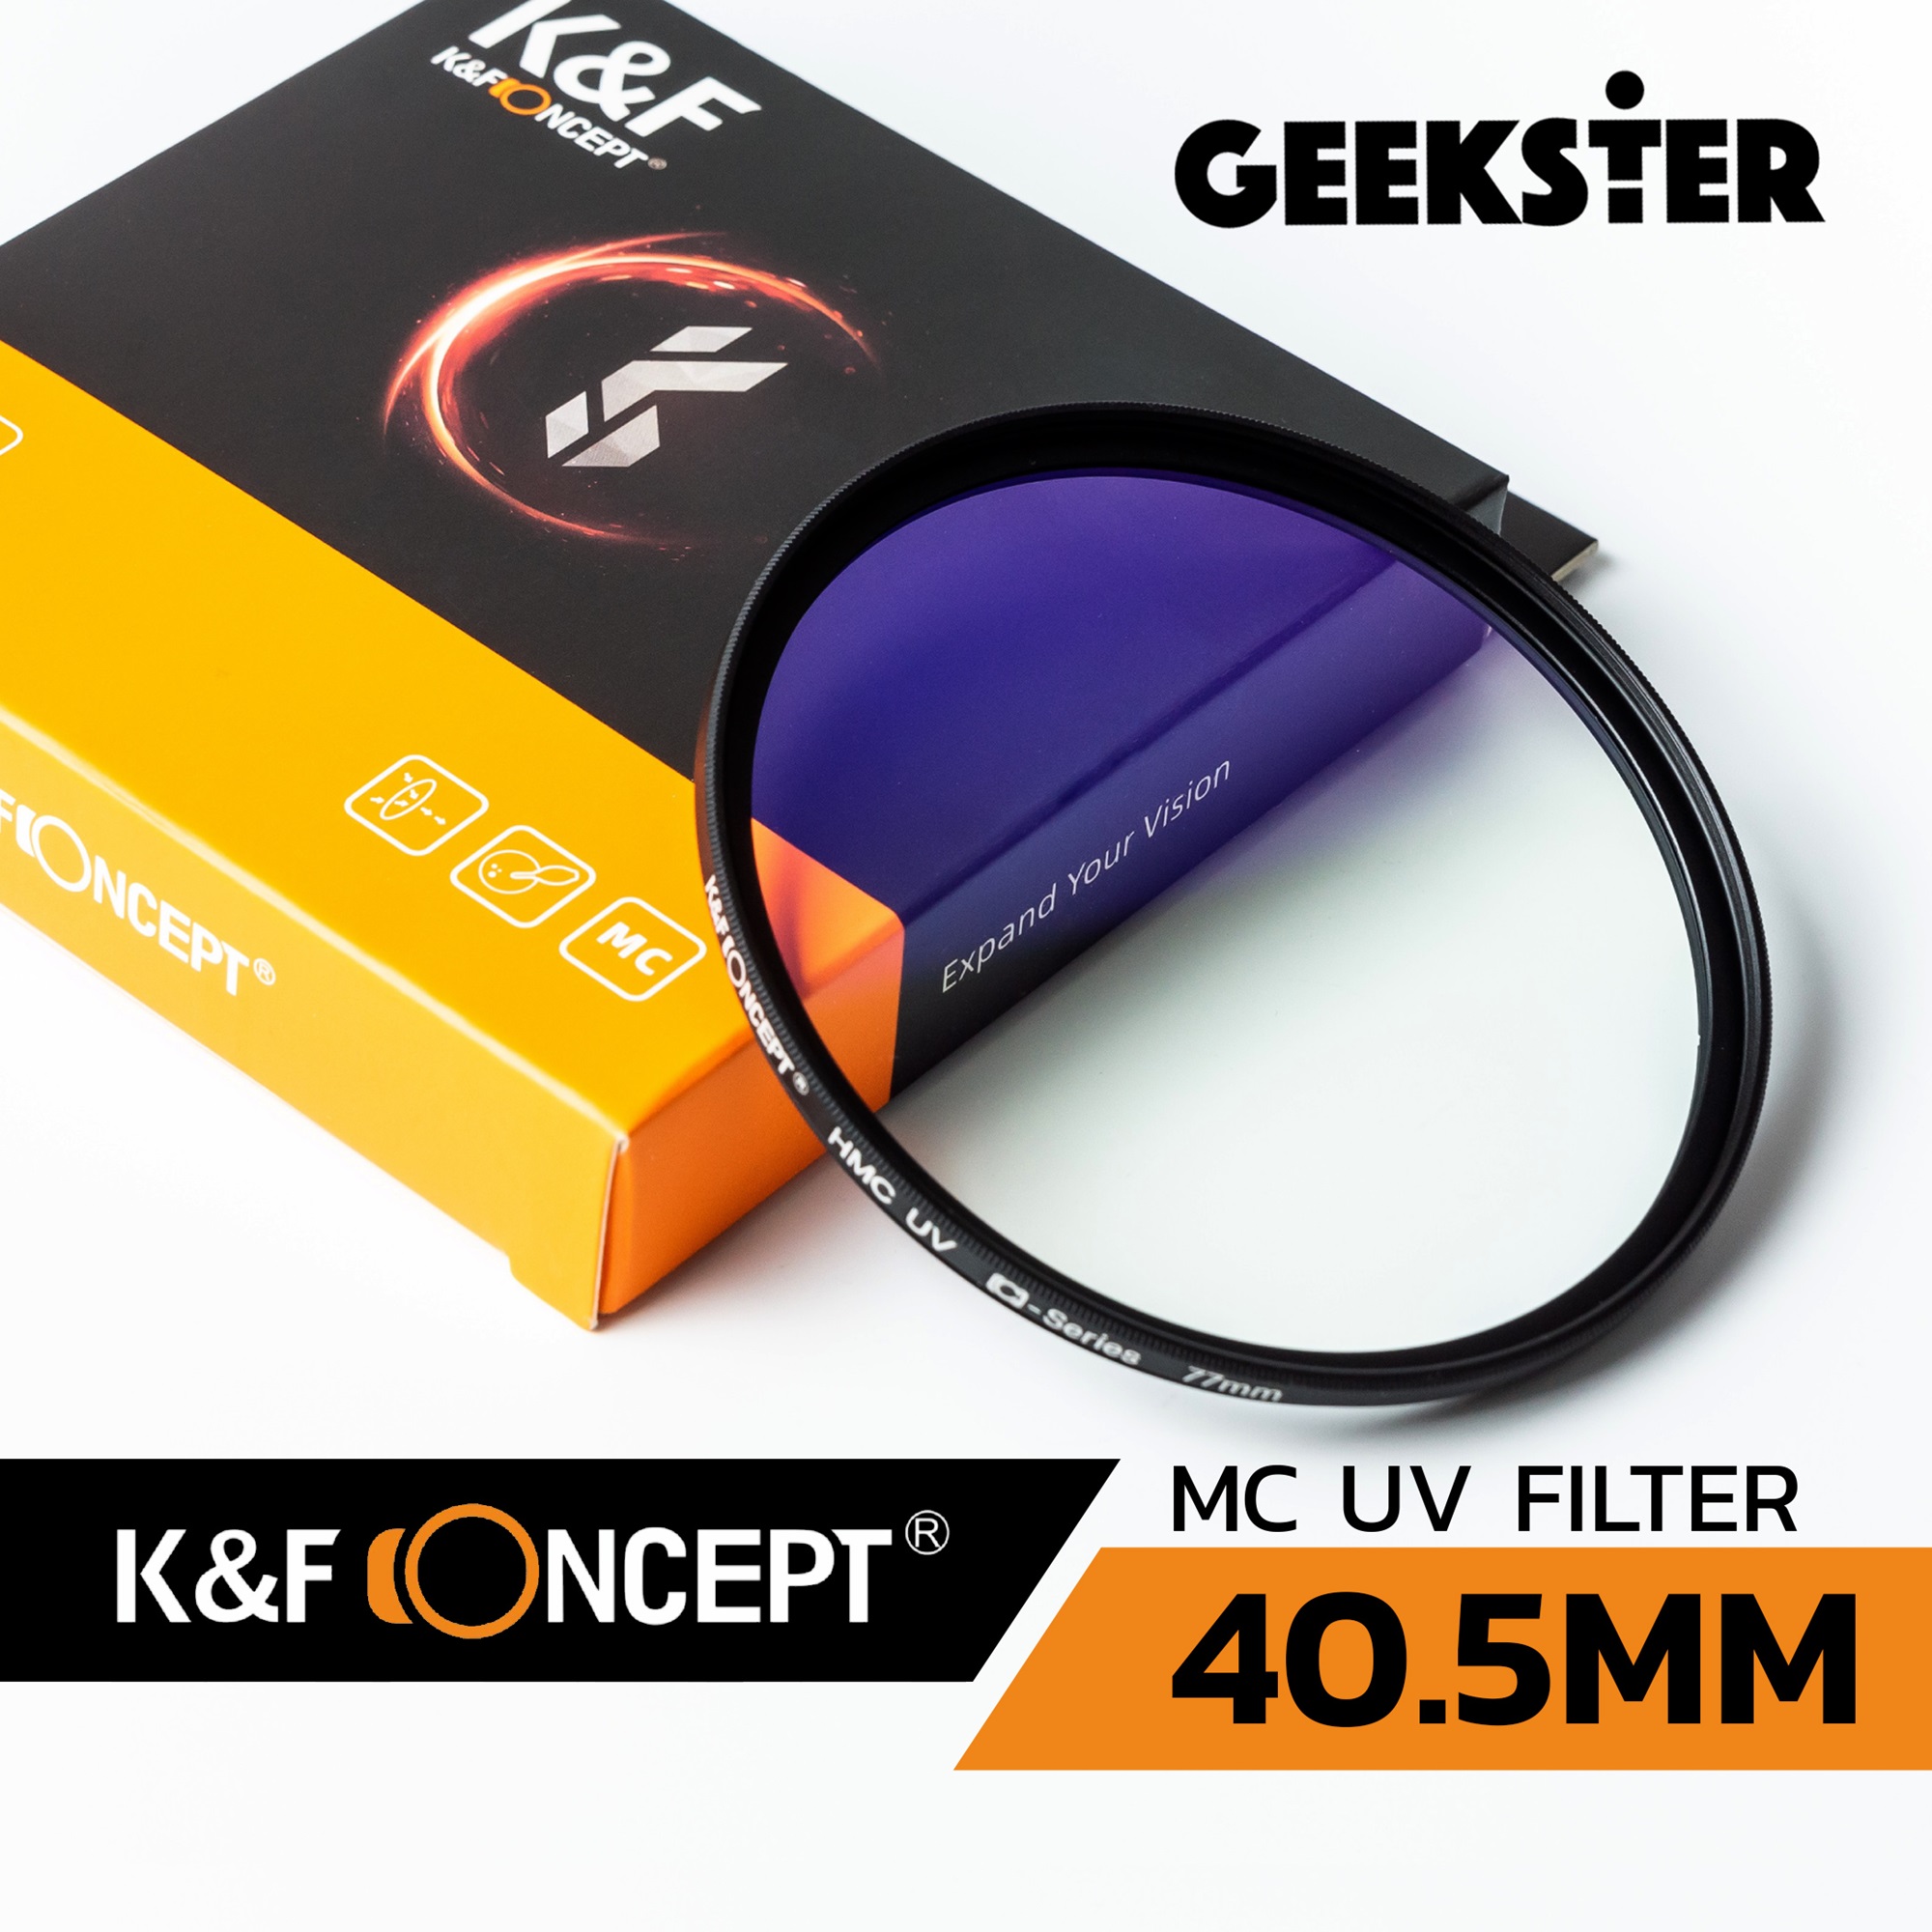 K&F MC UV Filter แก้ว Japan 37mm / 39mm / 40mm / 40.5mm / 43mm / 46mm / 49mm / 52mm / 55mm / 58mm / 62mm / 67mm / 72mm / 77mm ( FILTER MC UV อย่างดี ) ที่กรองรังสียูวีโซด์ขนาดบางเป็นพิเศษ Professional MC  ( ฟิลเตอร์ บางพิเศษ ) KF Multi Coated HMCFilter